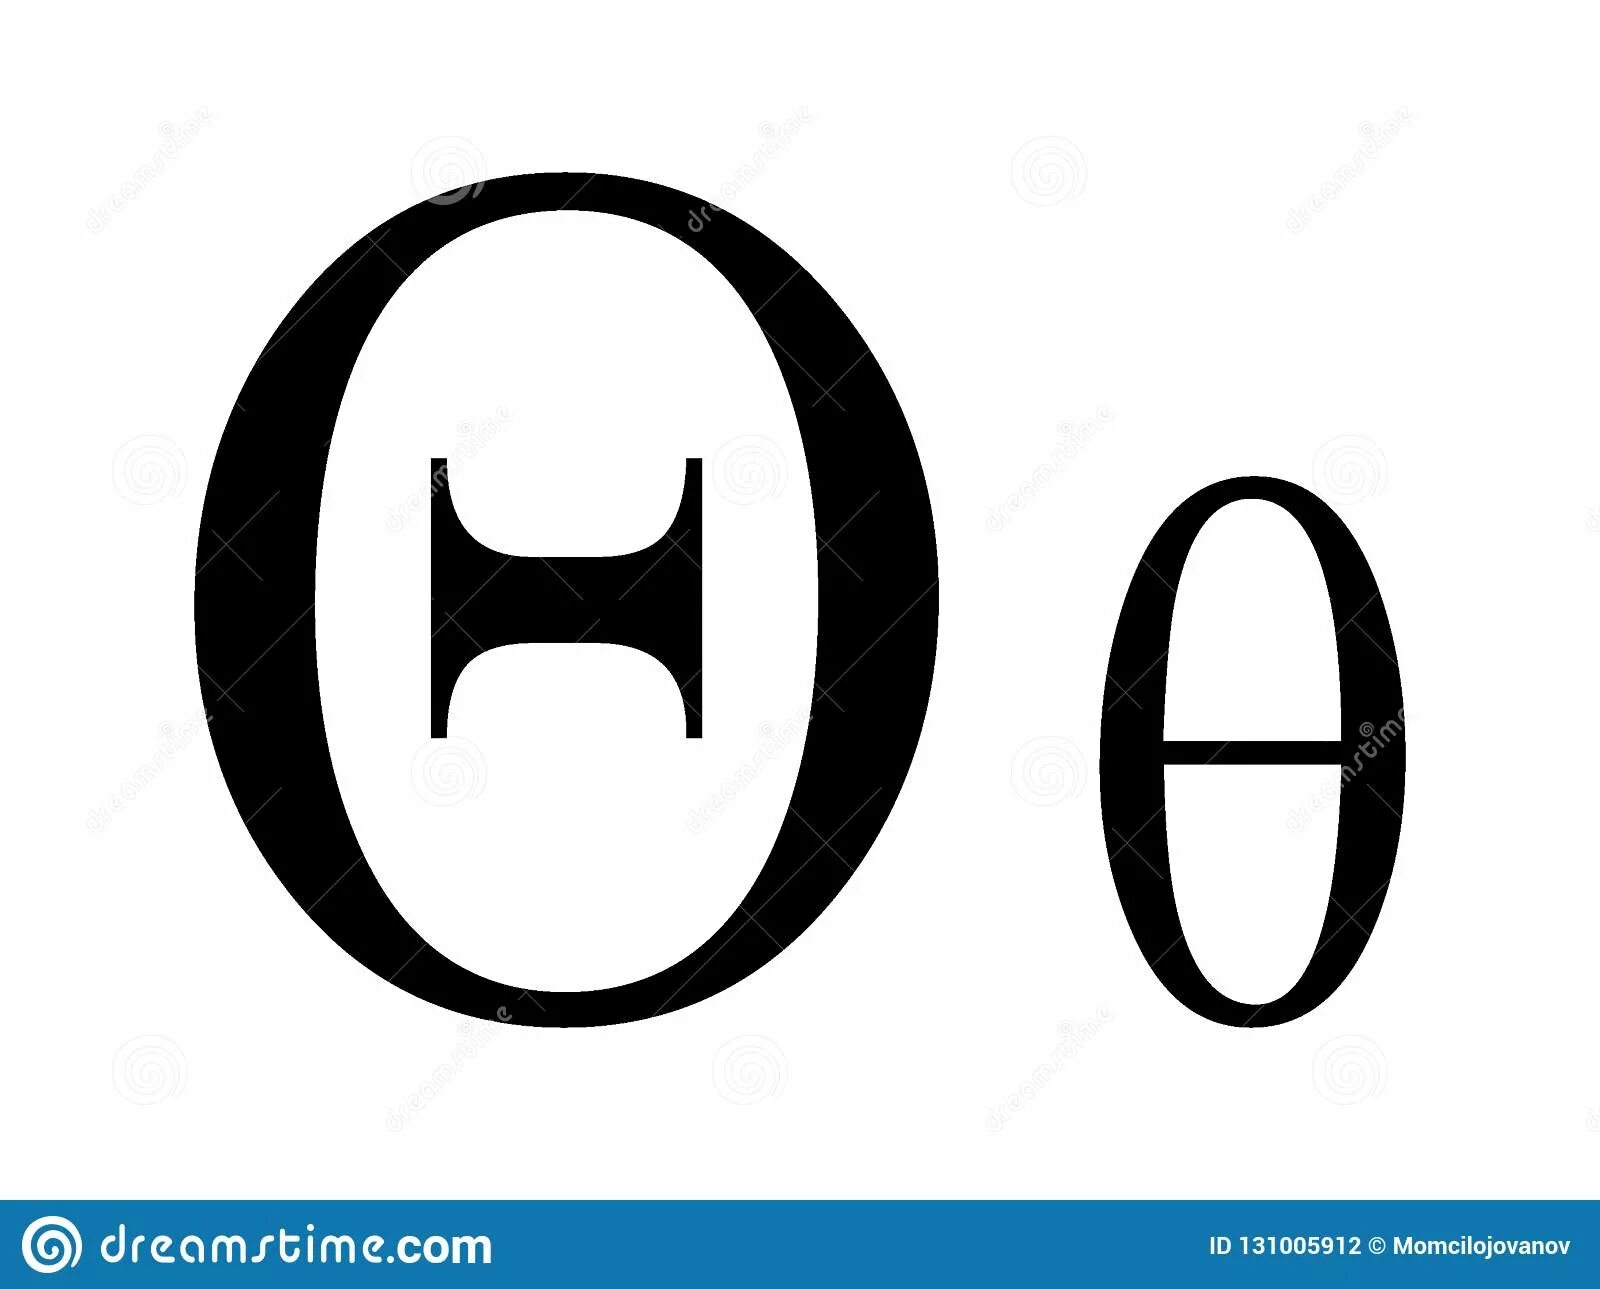 Греческая буква символ дня земли. Тэта буква. Греческая буква тета. Theta буква. Греческая буква Тэта.